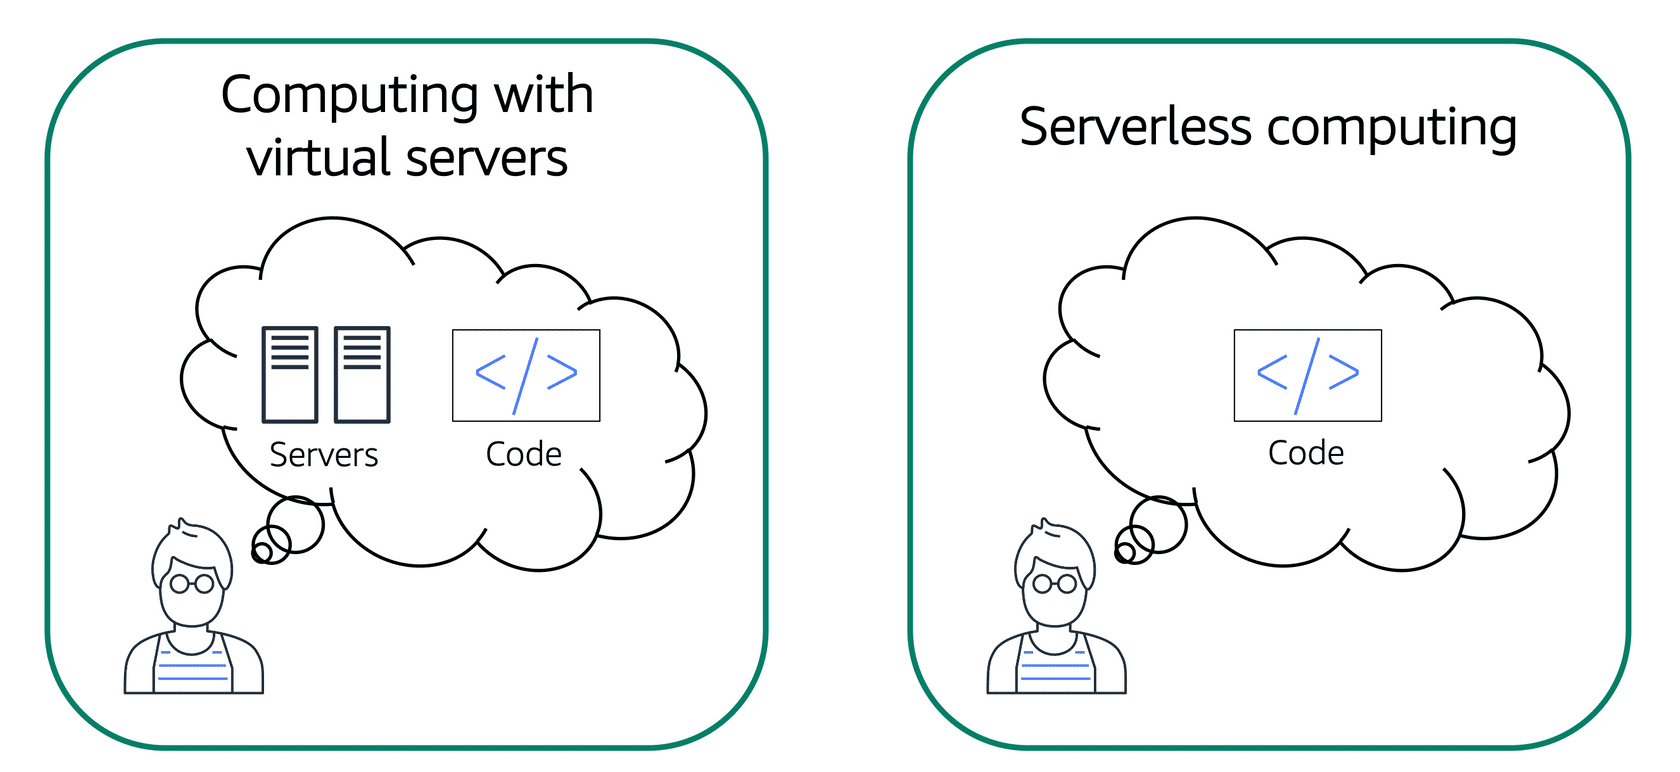 computing with virtual servers and serverless computing compared